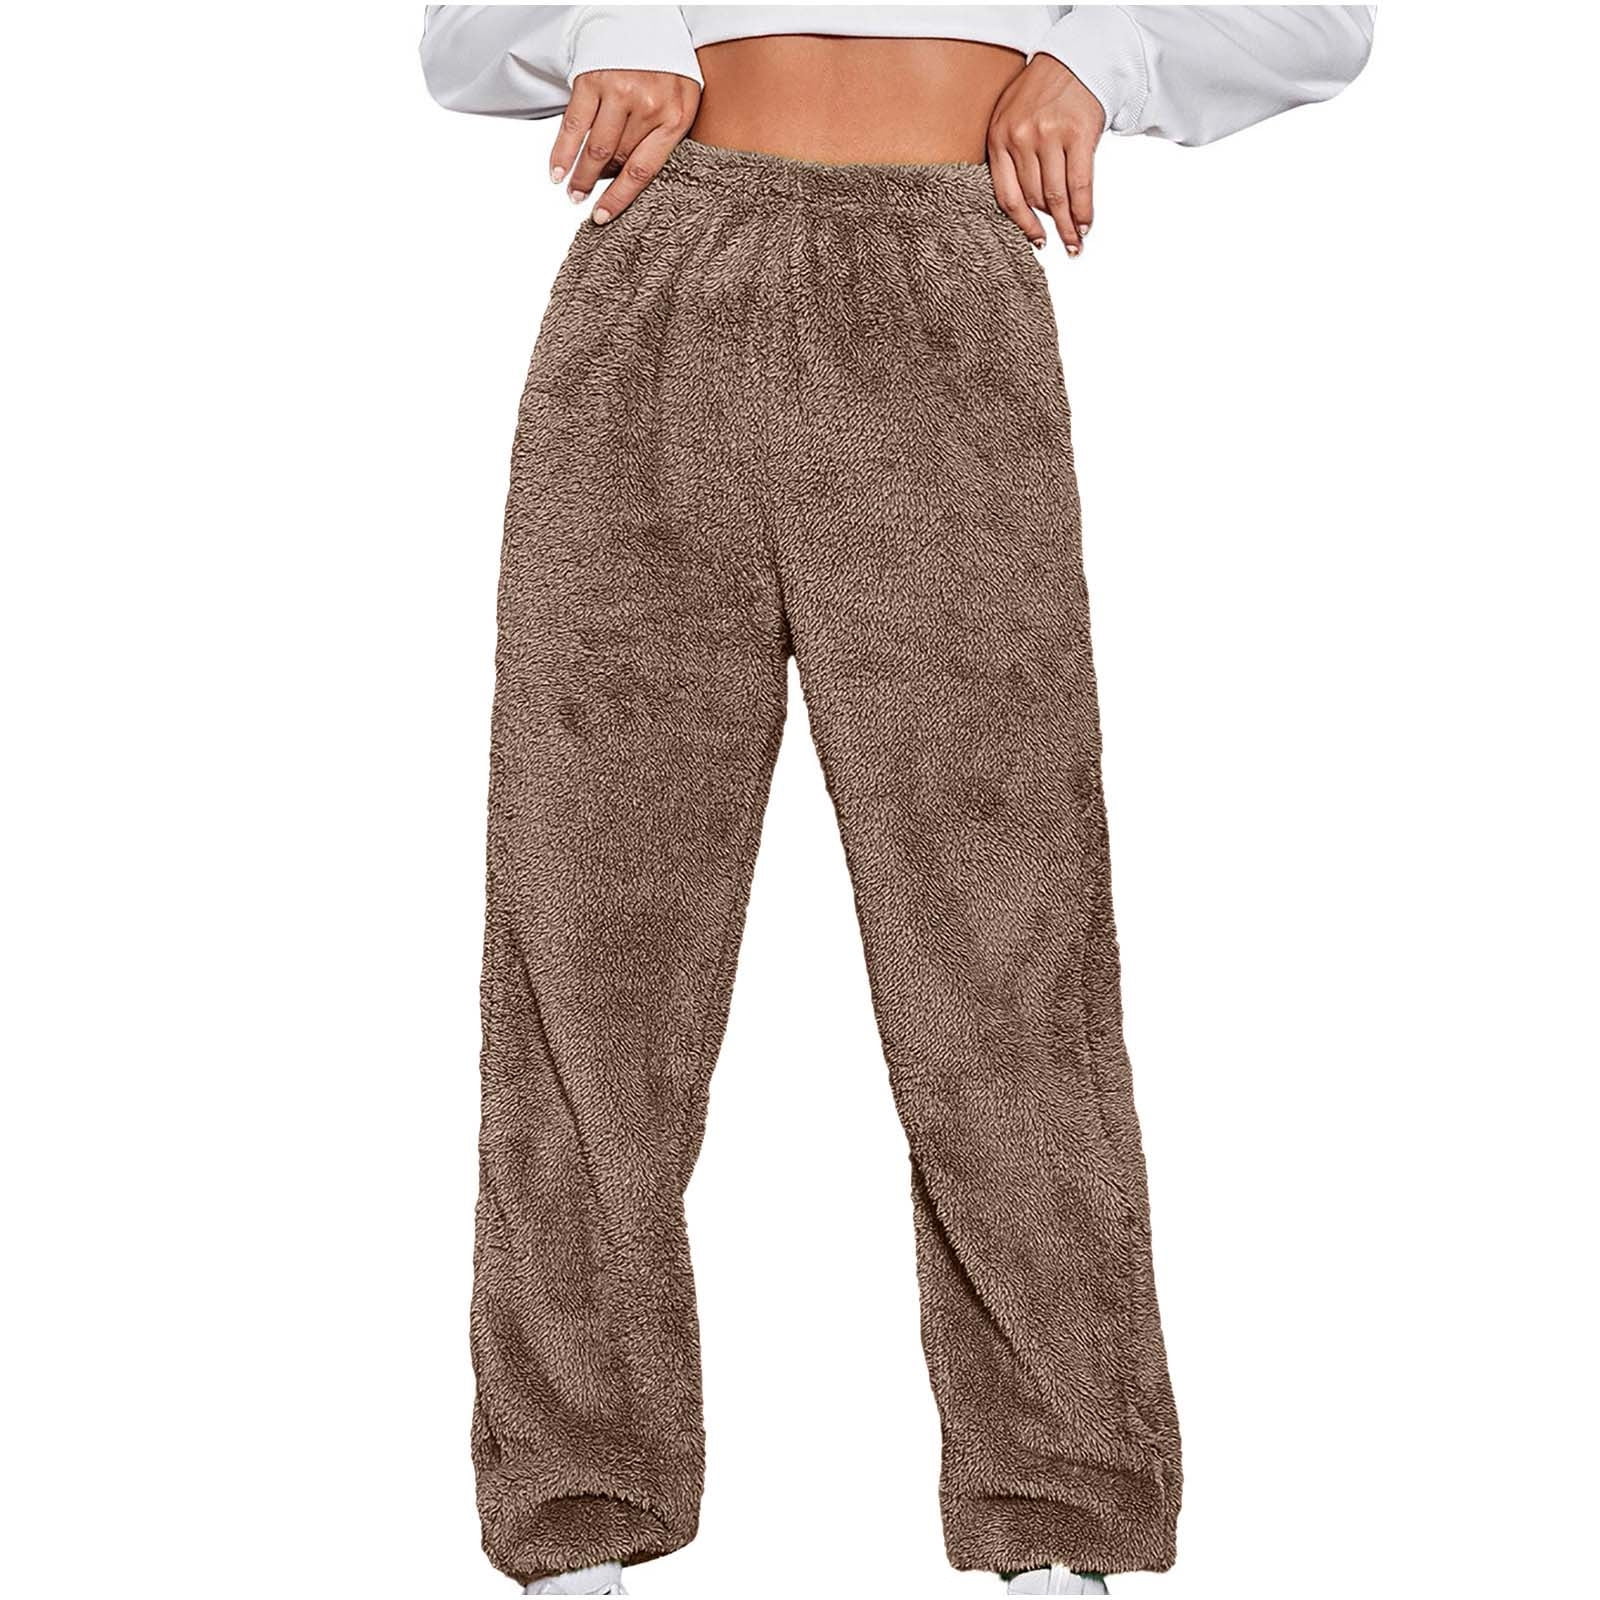 Thermal Underwear Bottoms for Women Tall Womens Autumn Winter Warm Pants  Plush